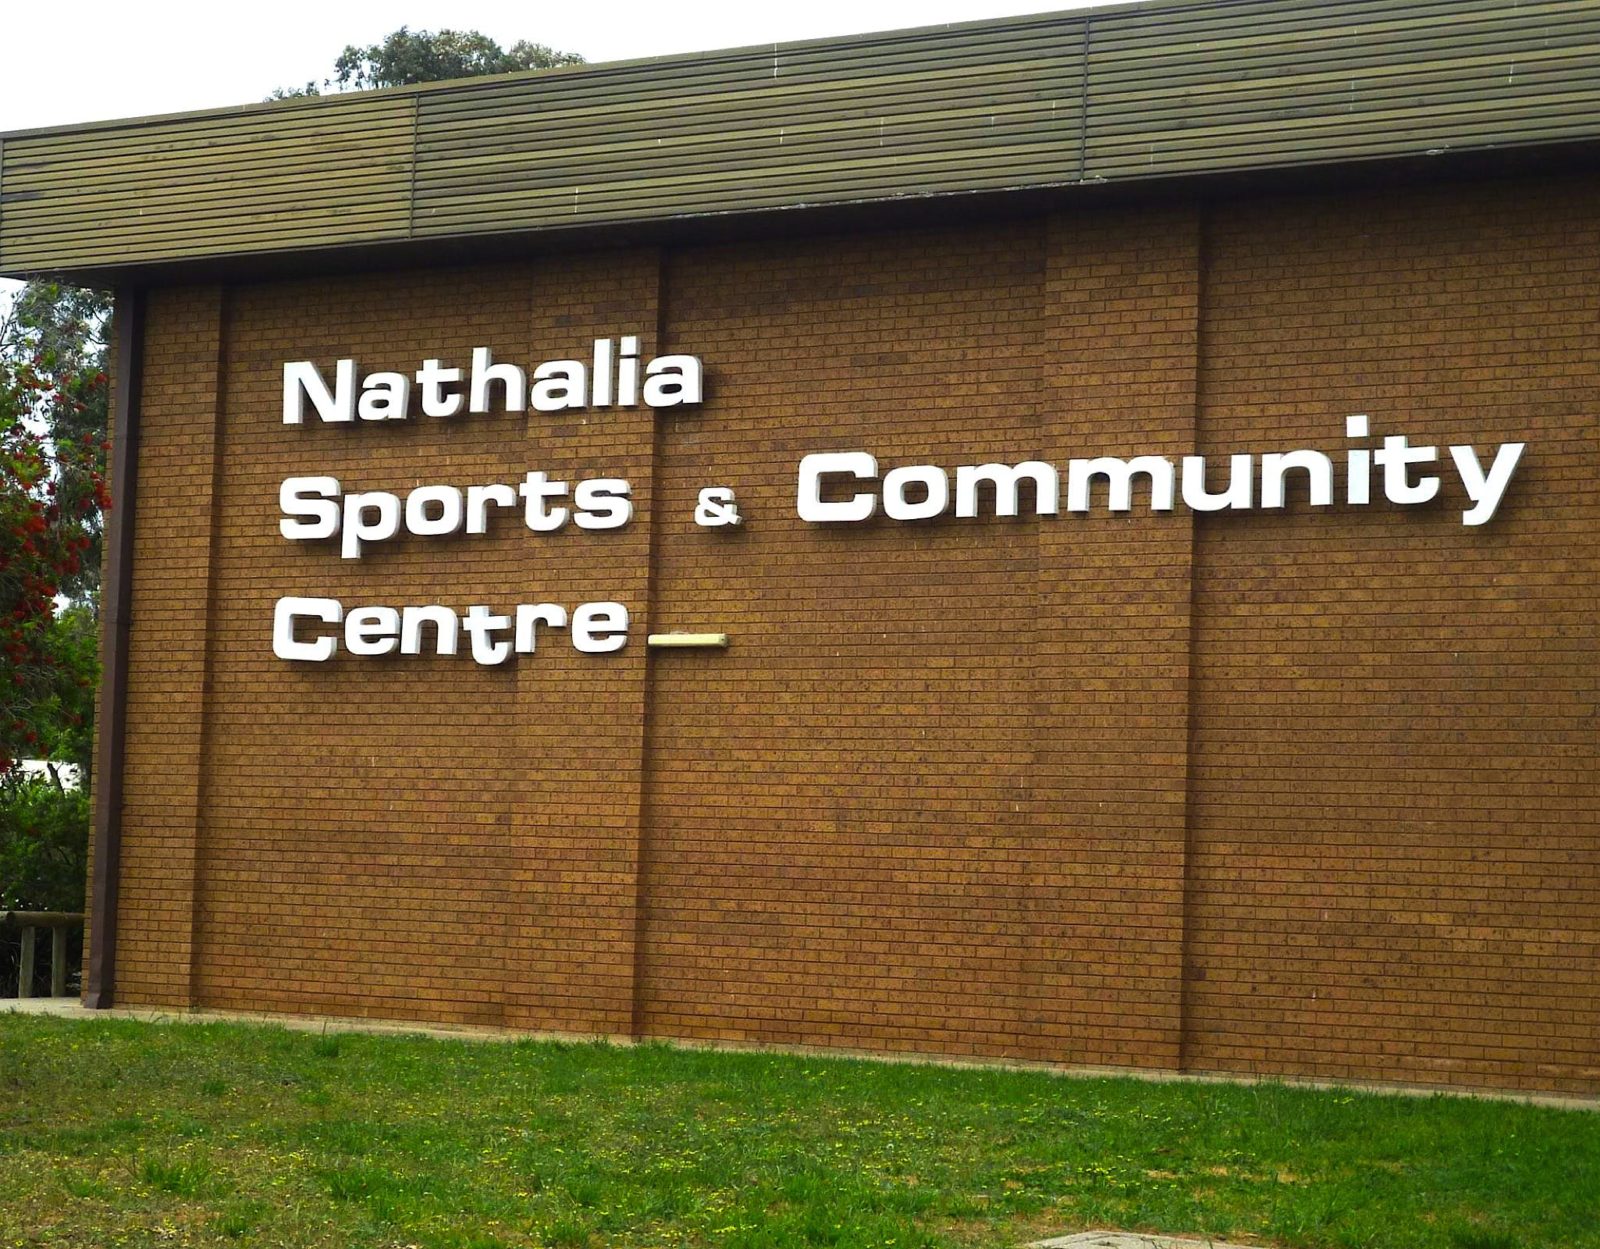 nathalia community centre